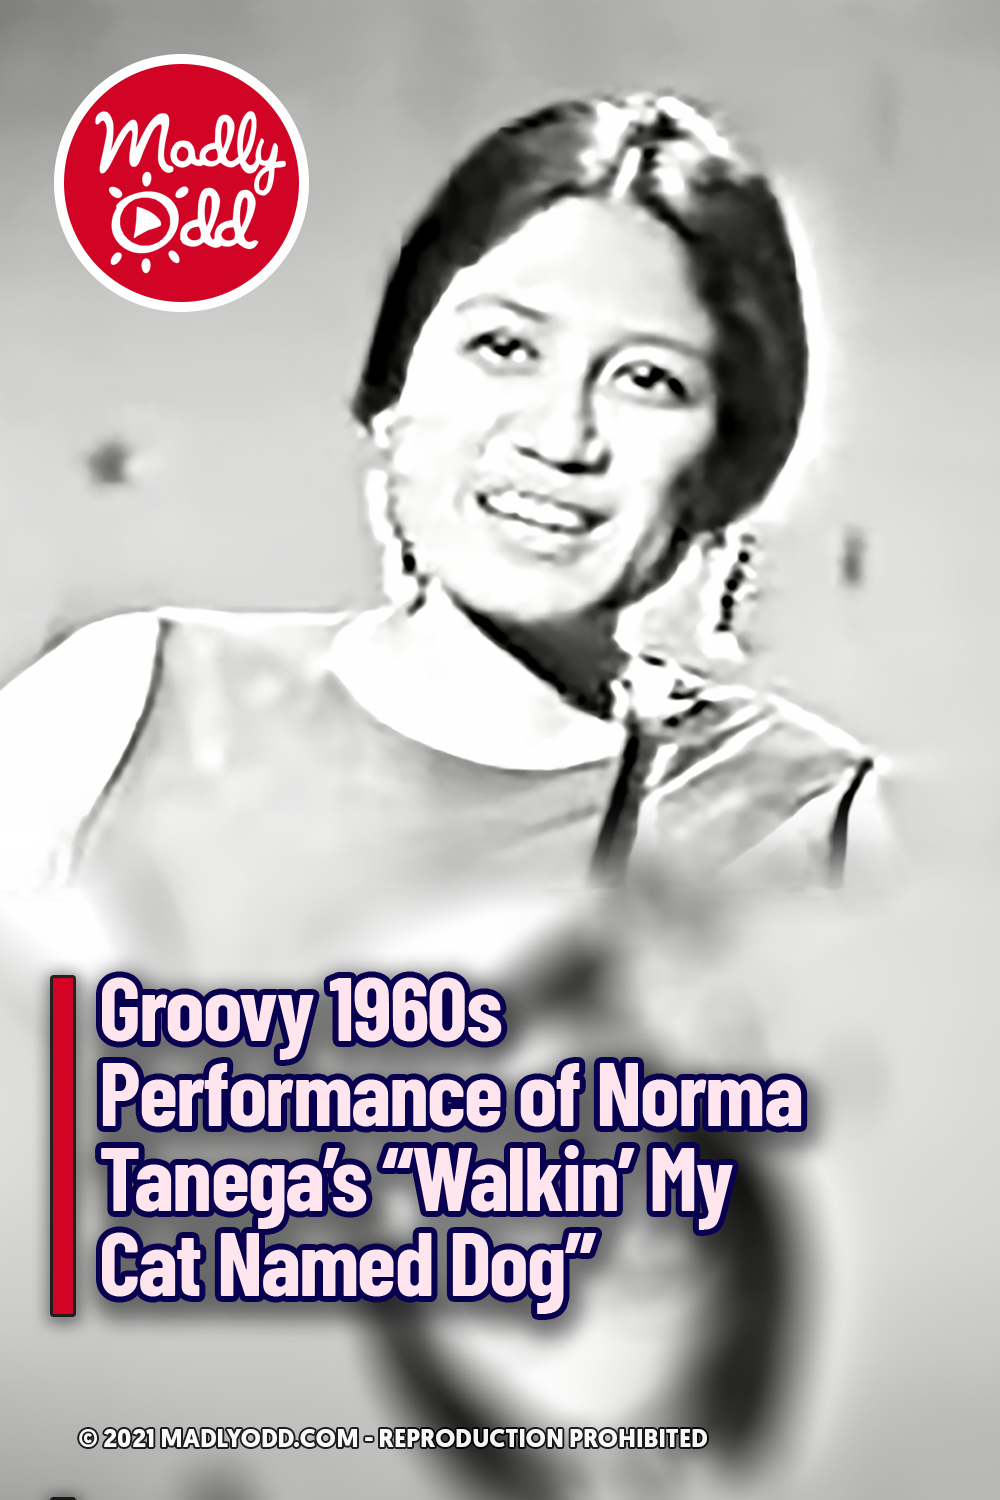 Groovy 1960s Performance of Norma Tanega’s “Walkin’ My Cat Named Dog”